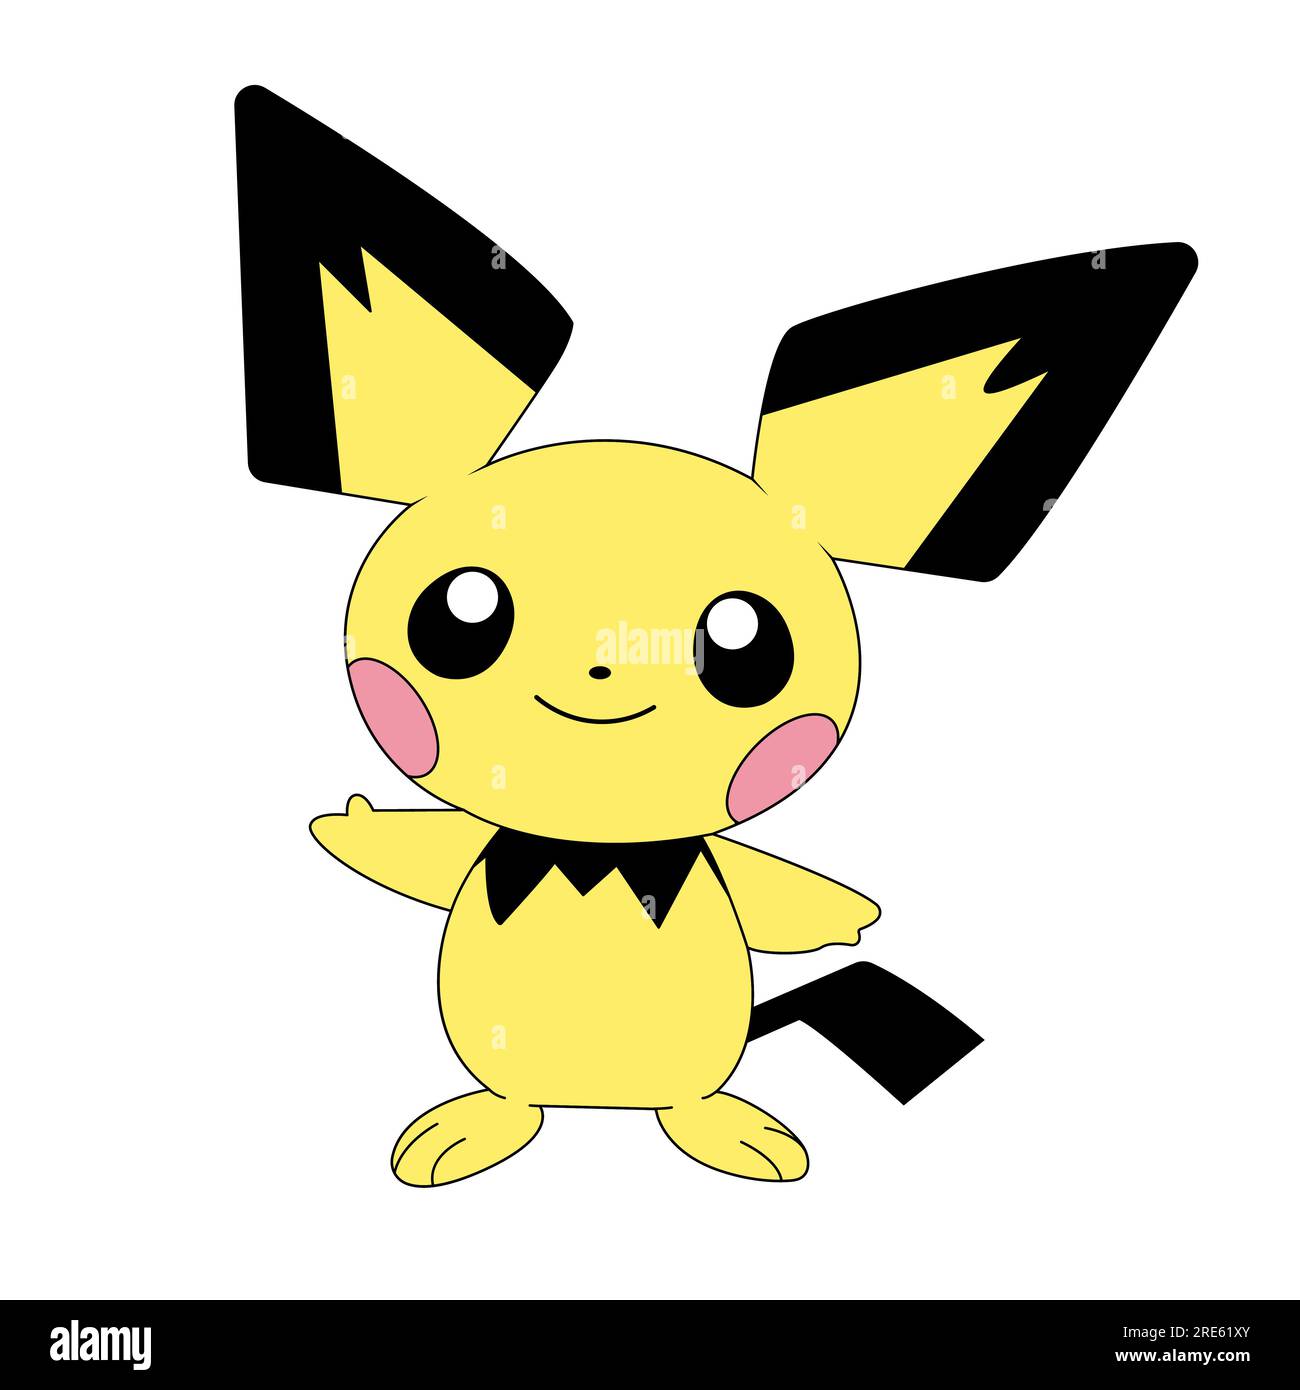 Pikachu pokemon cartoon Stock Vector Images - Alamy